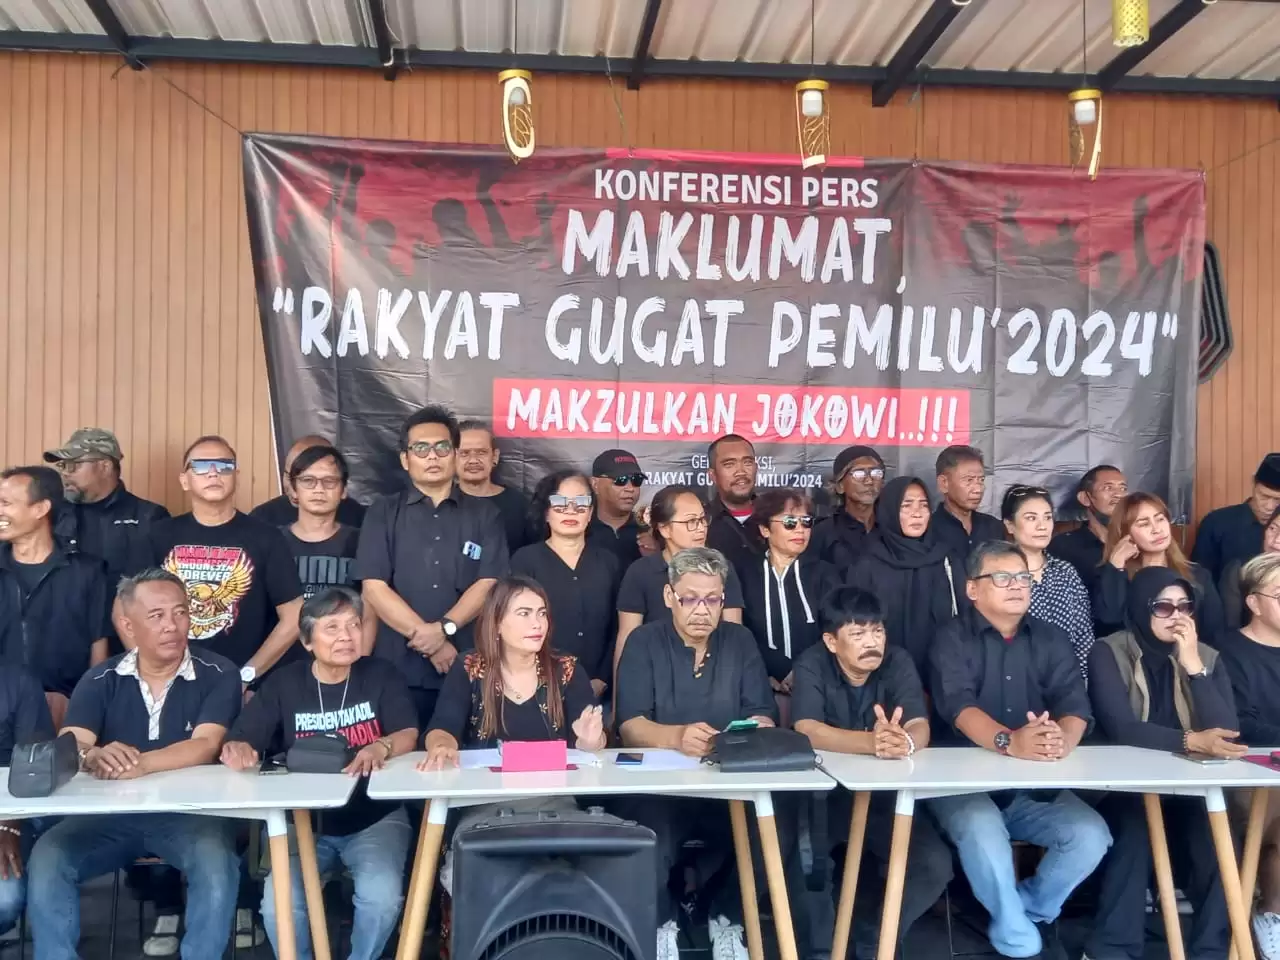 Kecurangan Halalkan Segala Cara, Gerakan Aksi Rakyat Gugat Pemilu 2024 Desak DPR Gulirkan Hak Angket hingga Makzulkan Jokowi